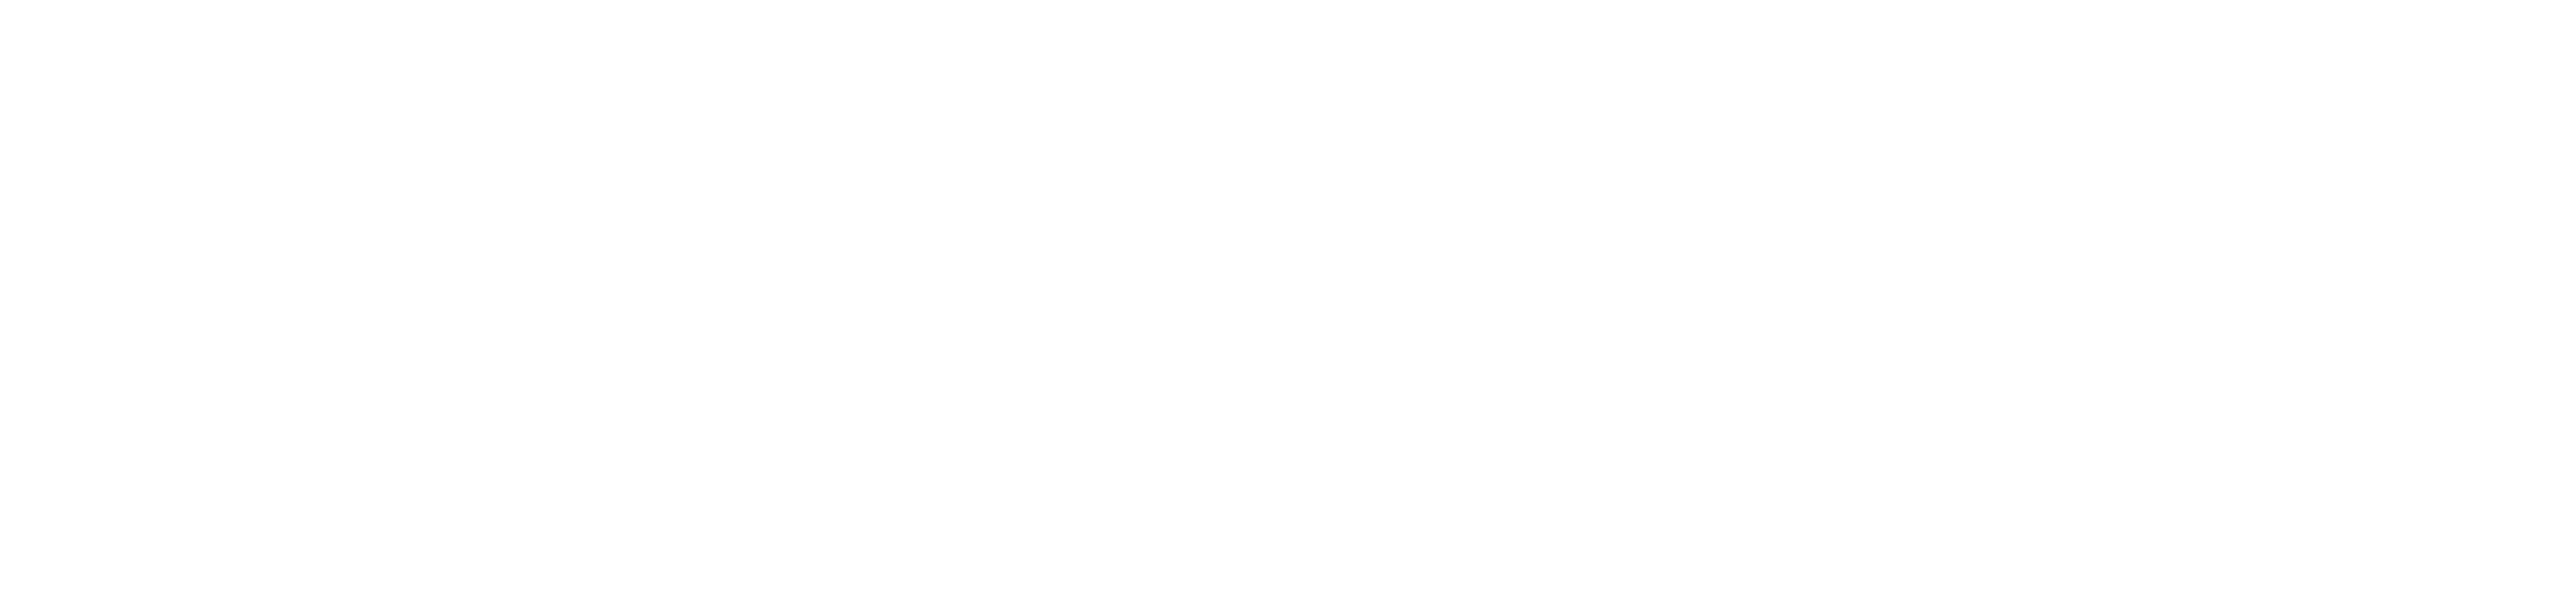 sitarali-logo